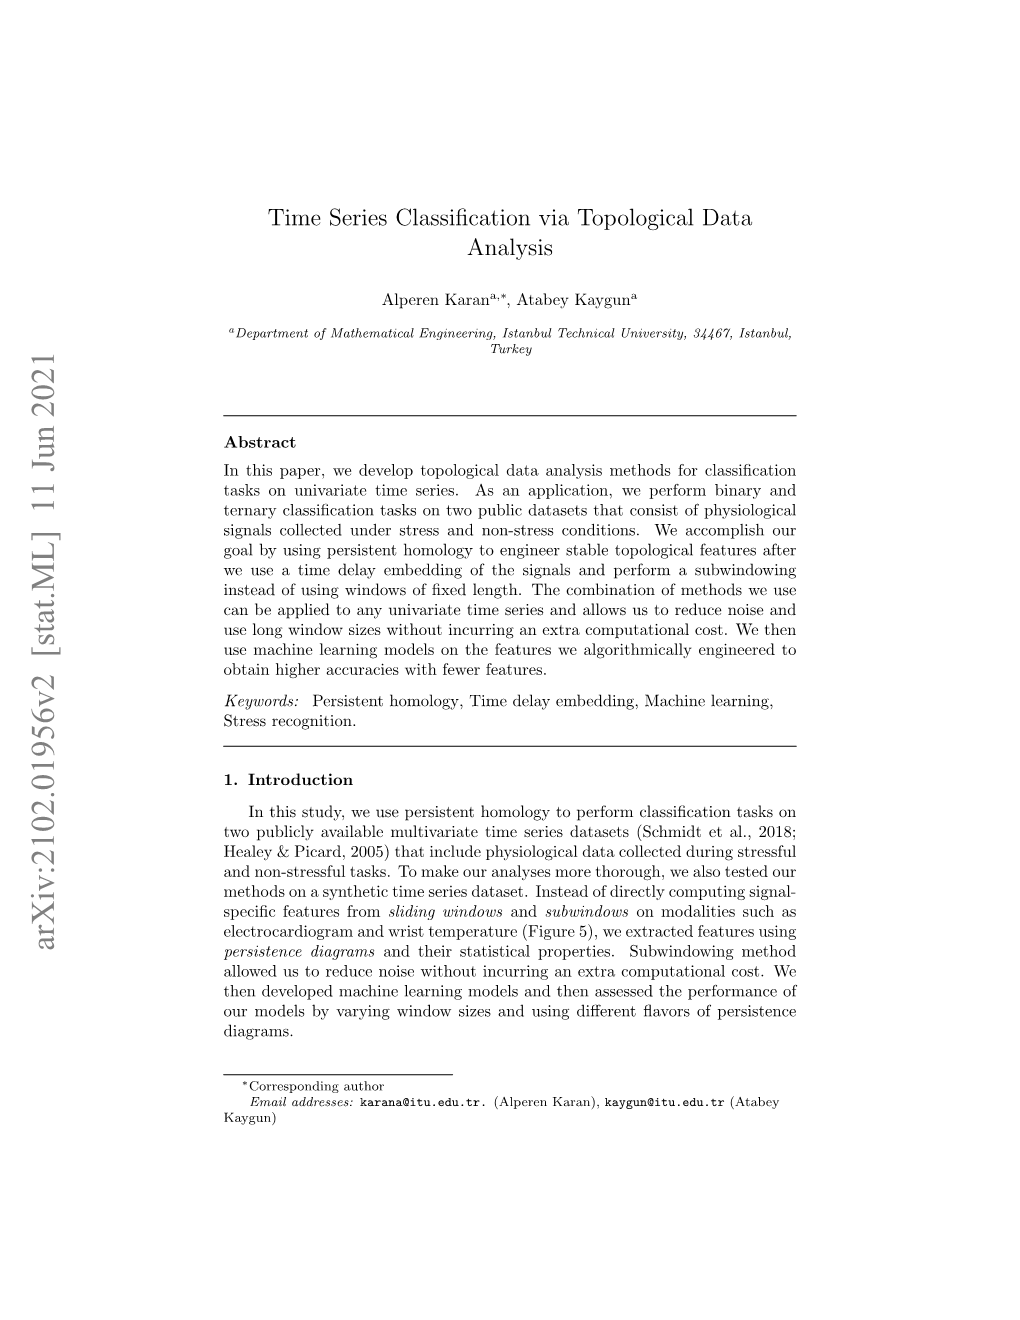 Time Series Classification Via Topological Data Analysis